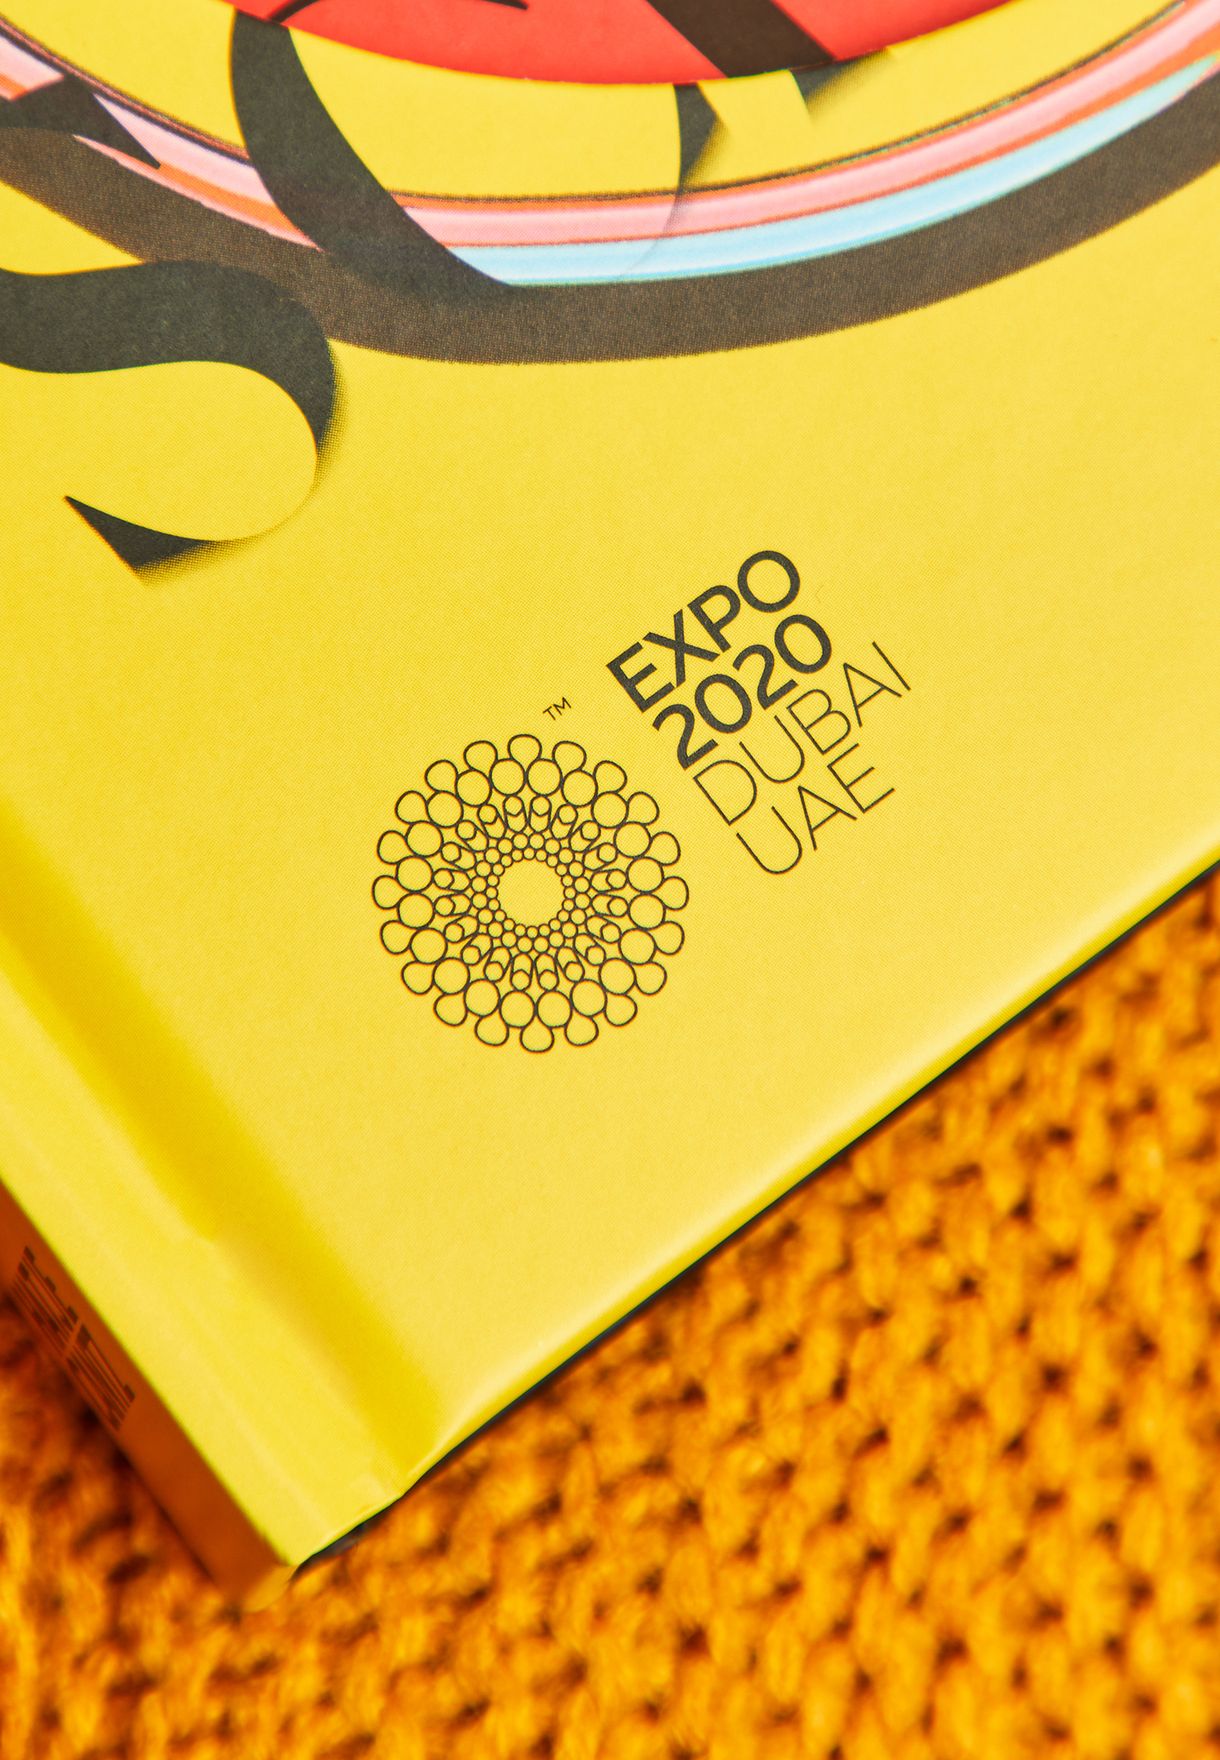 Expo 2020 Dubai: On The Book Of Sceneries